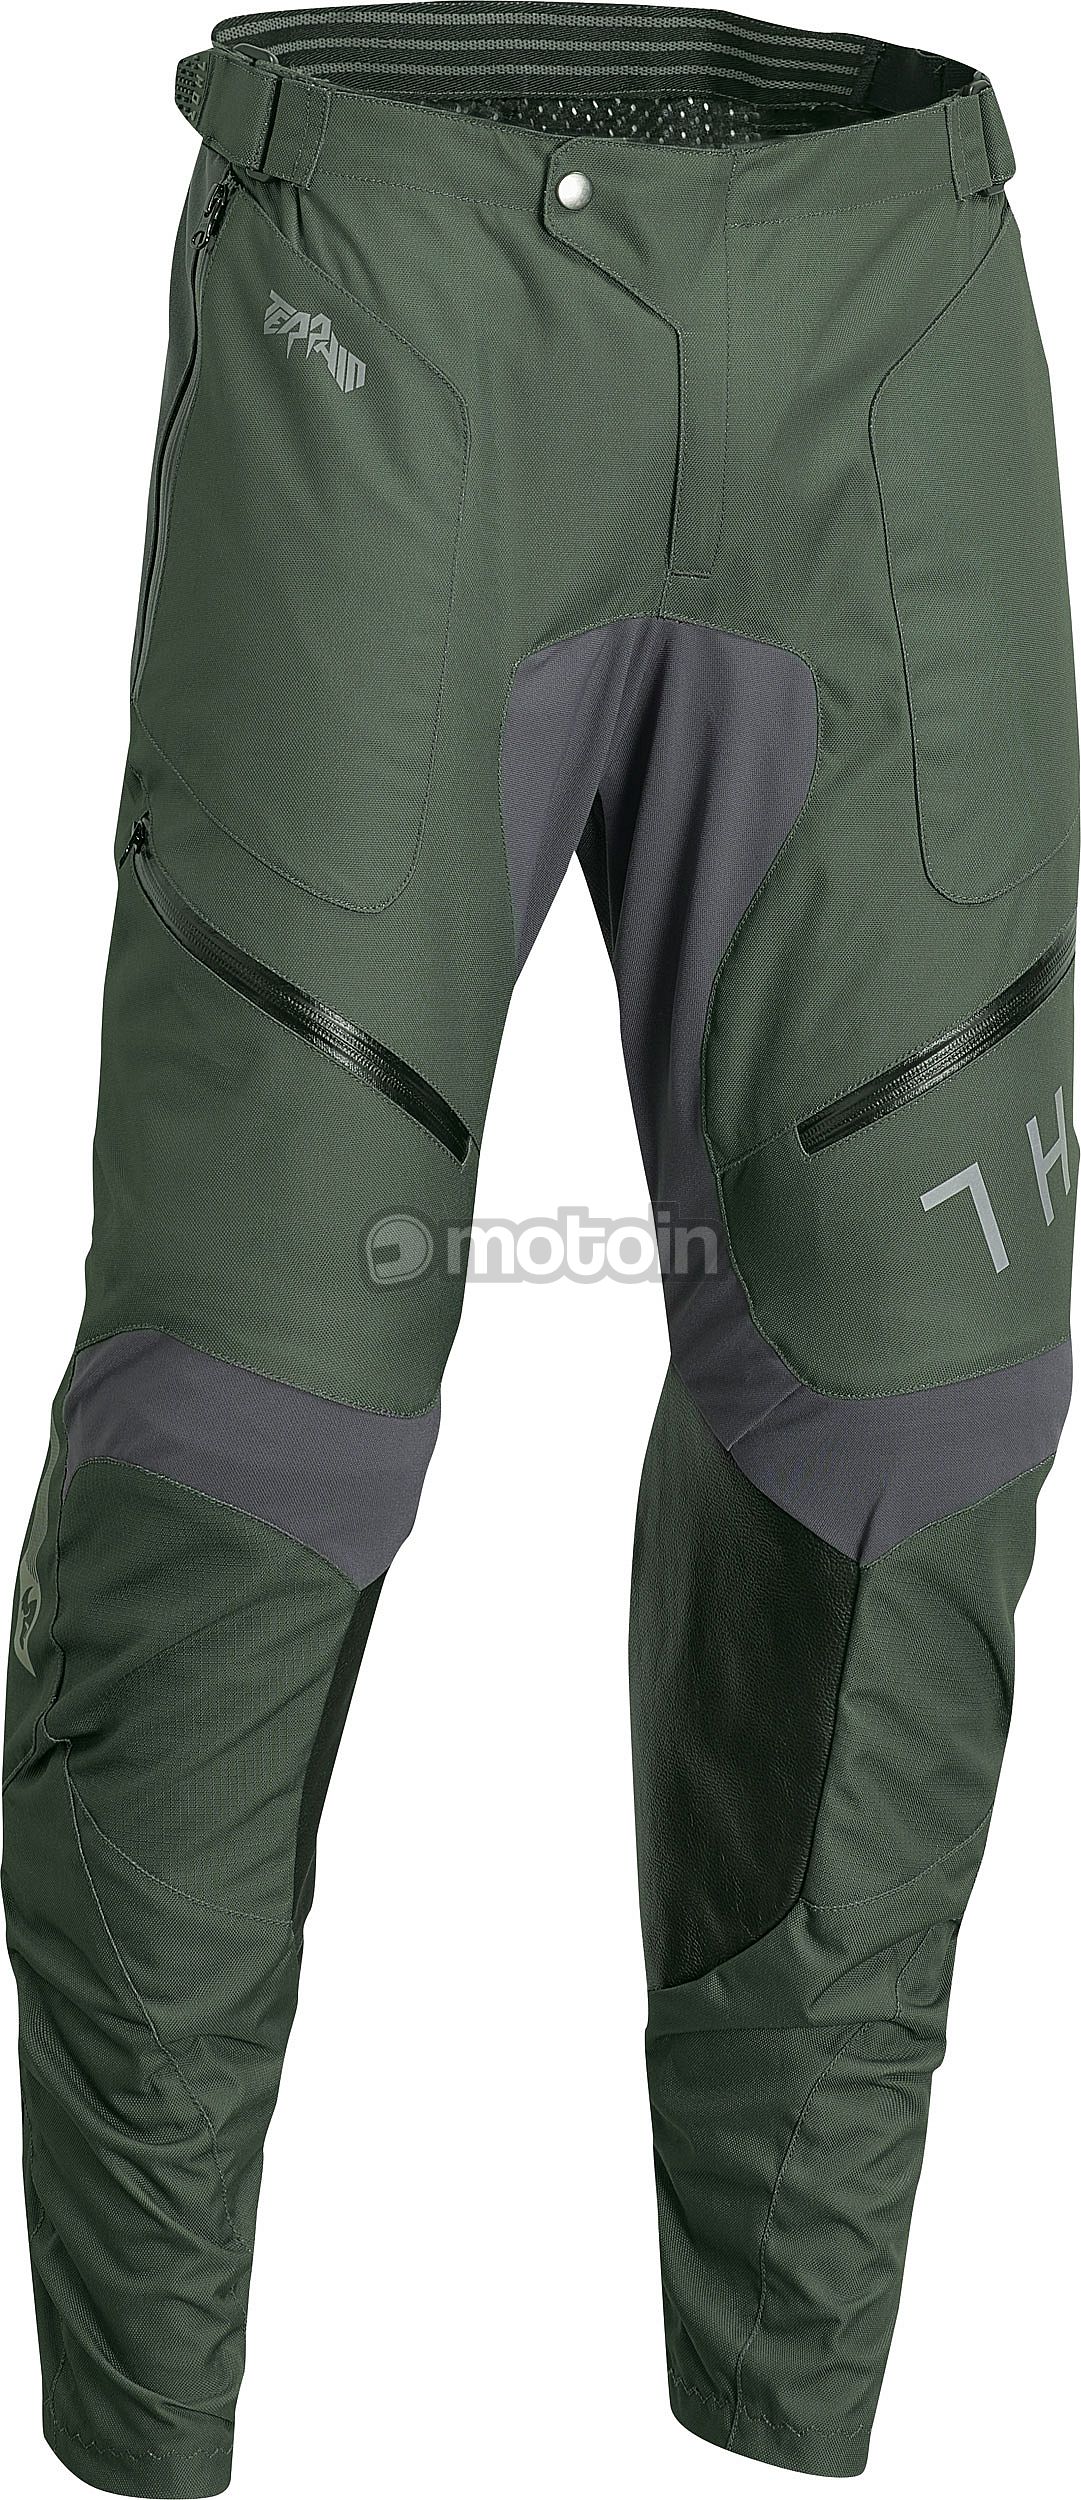 Thor Terrain In The Boot, spodnie tekstylne wodoodporne